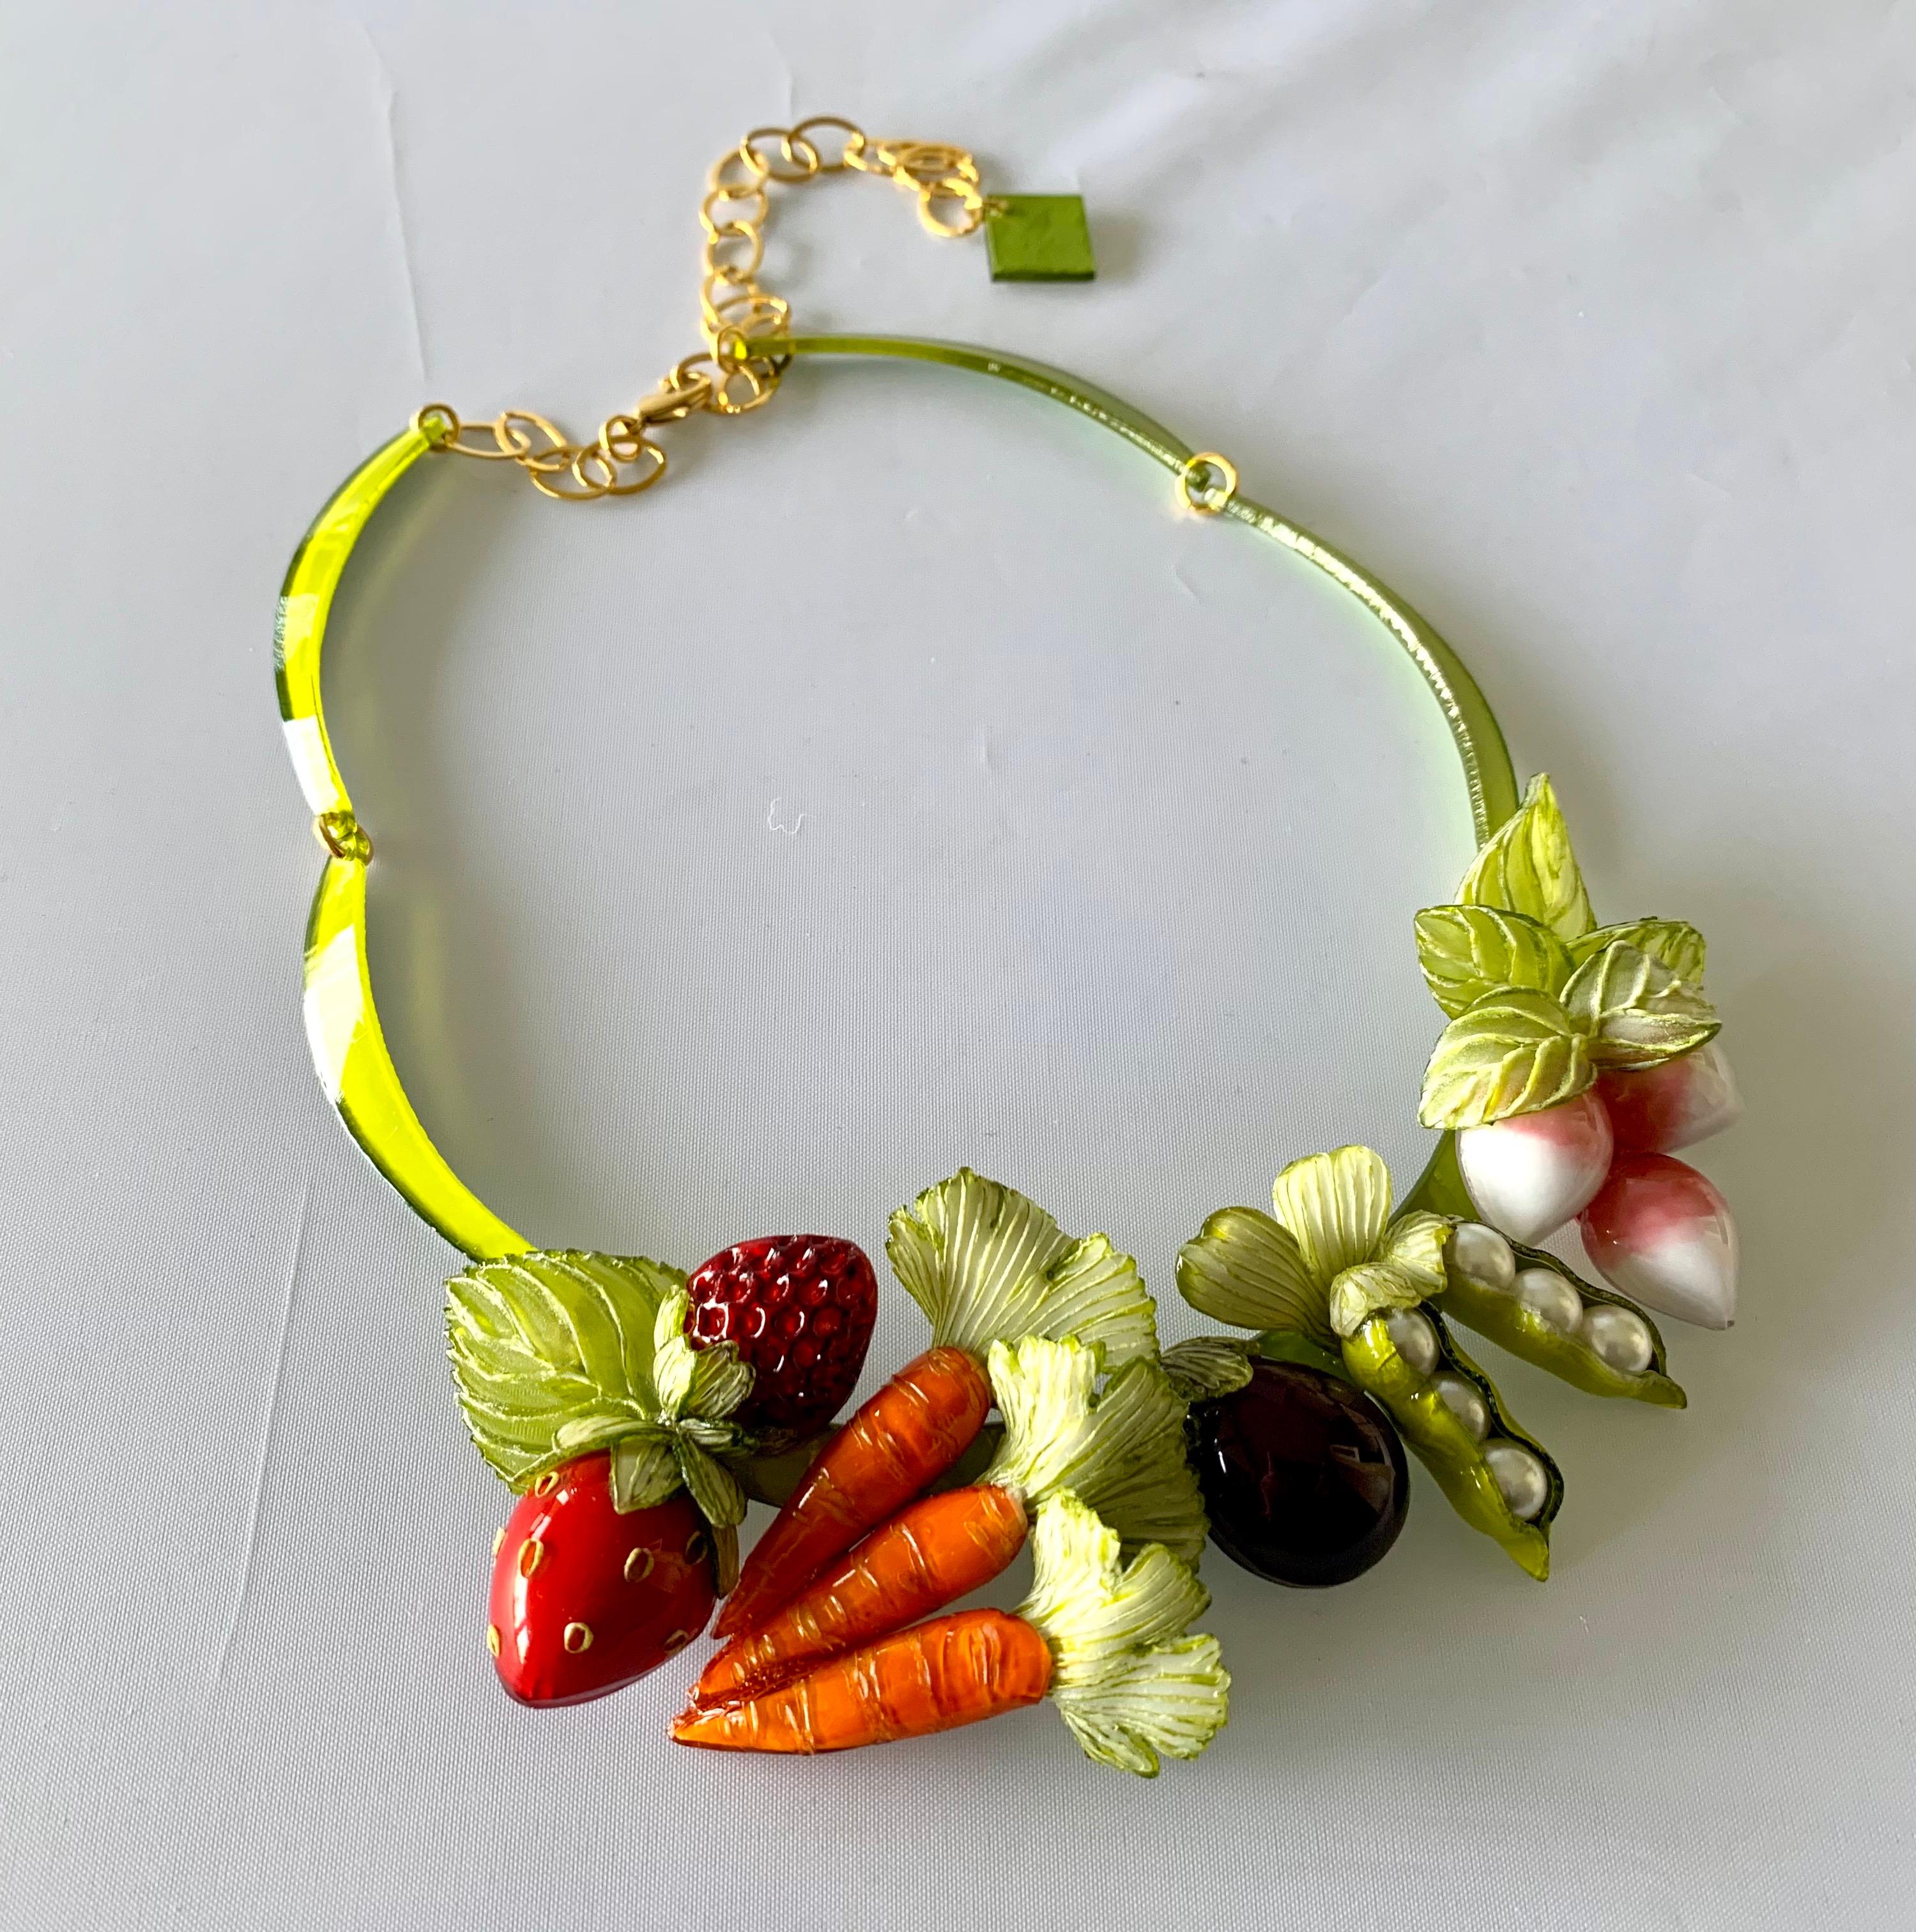 how do you make a vegetable necklace answer key e-29